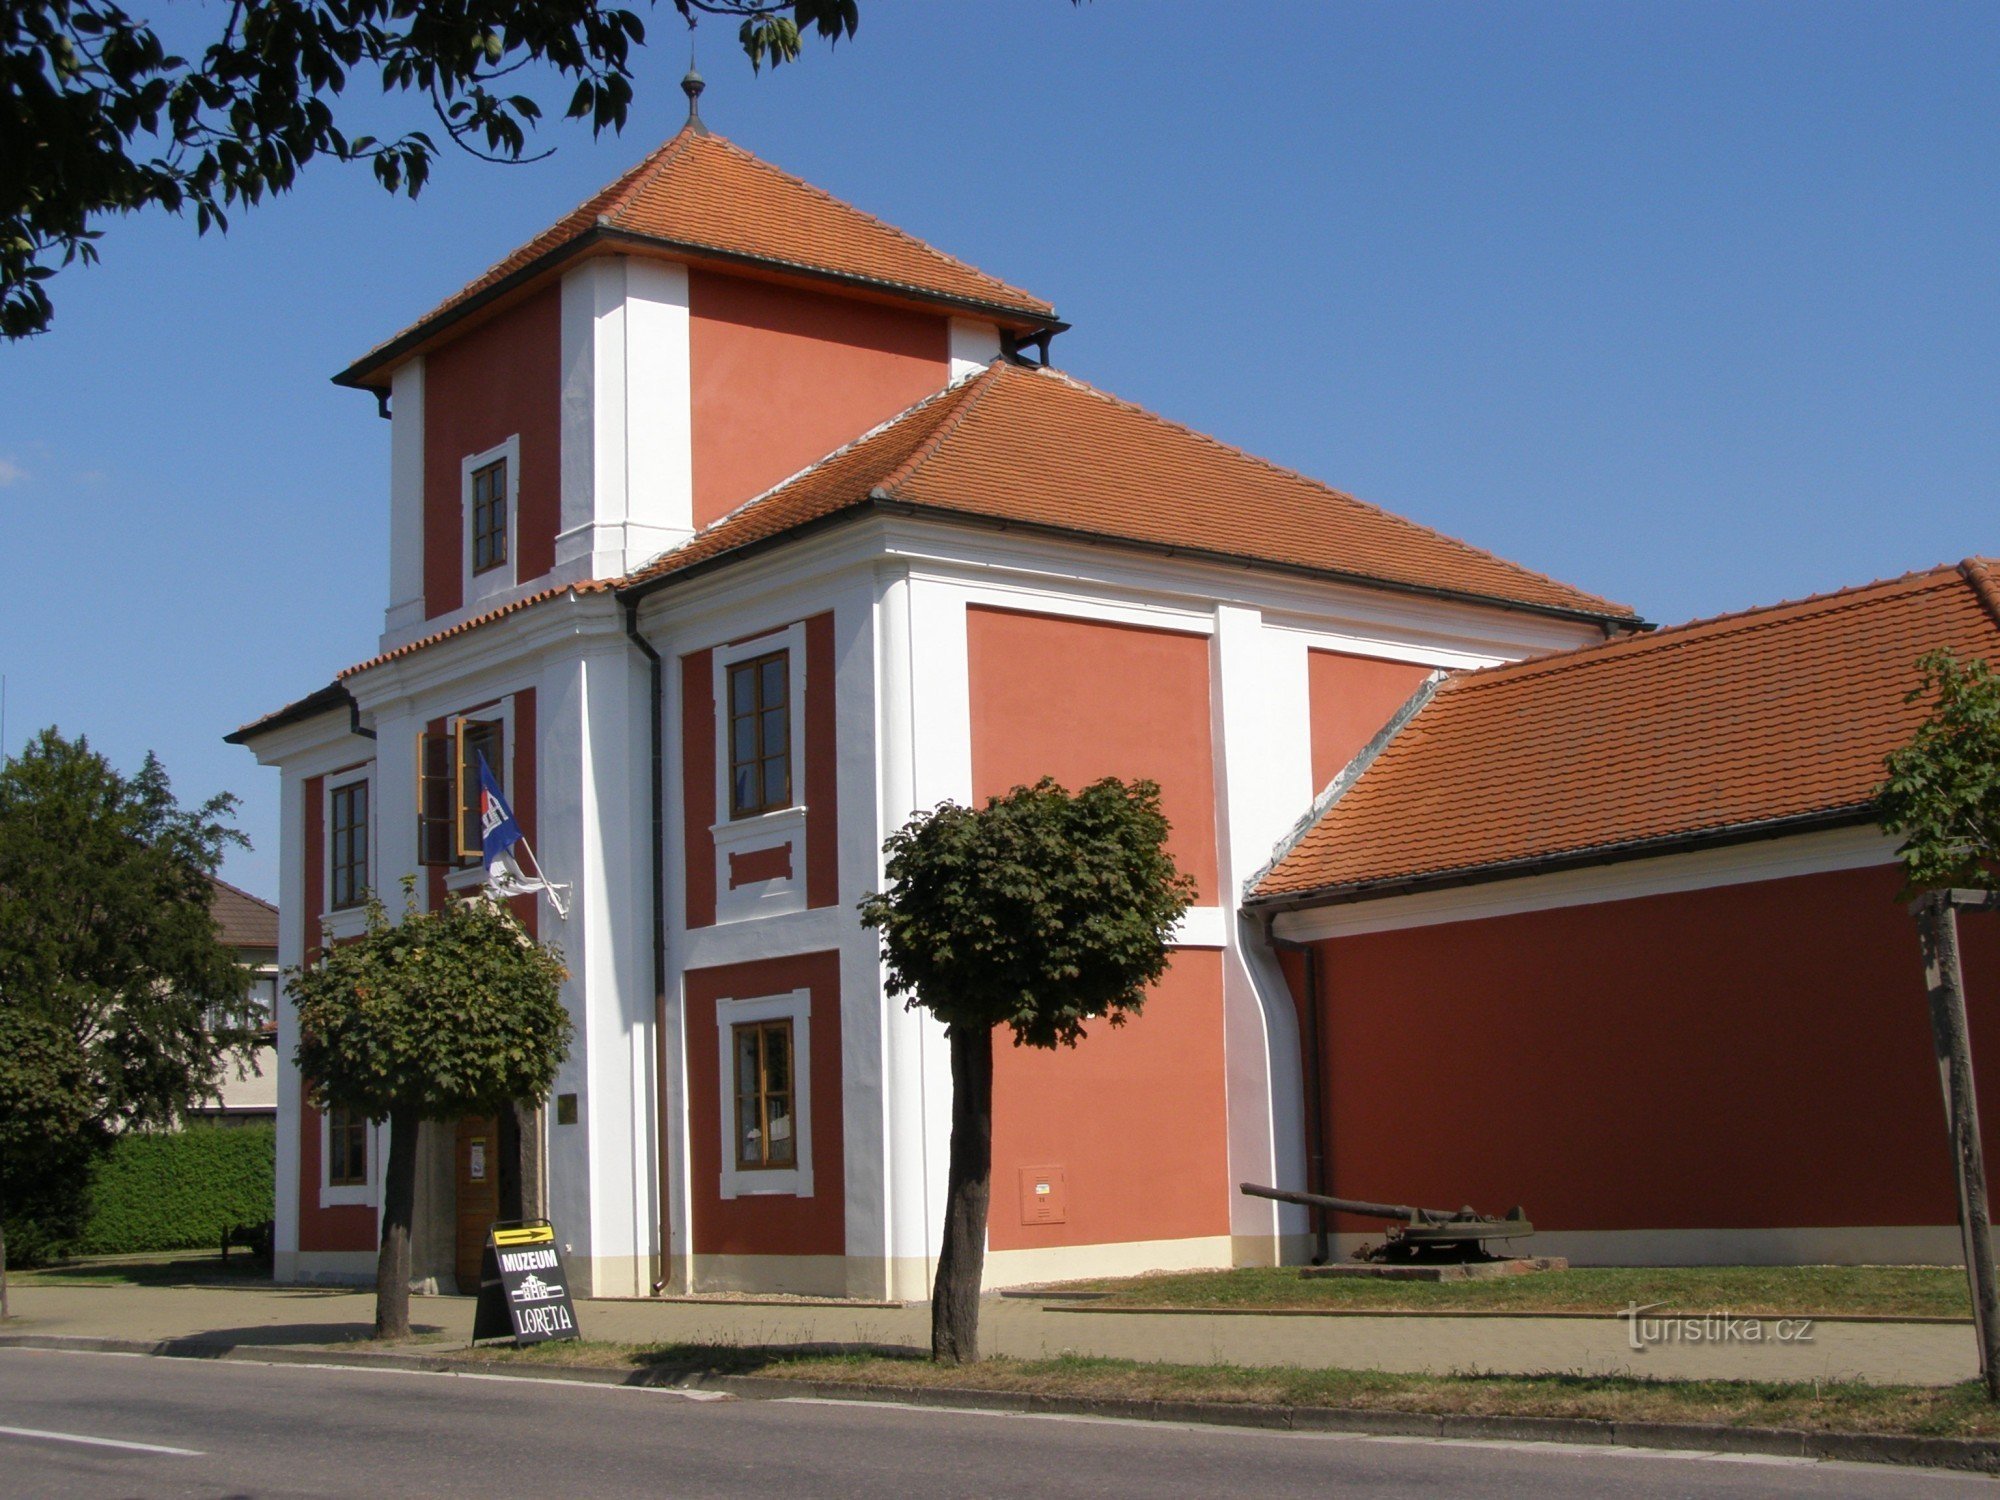 Chlumec nad Cidlinou - Loreta, city museum